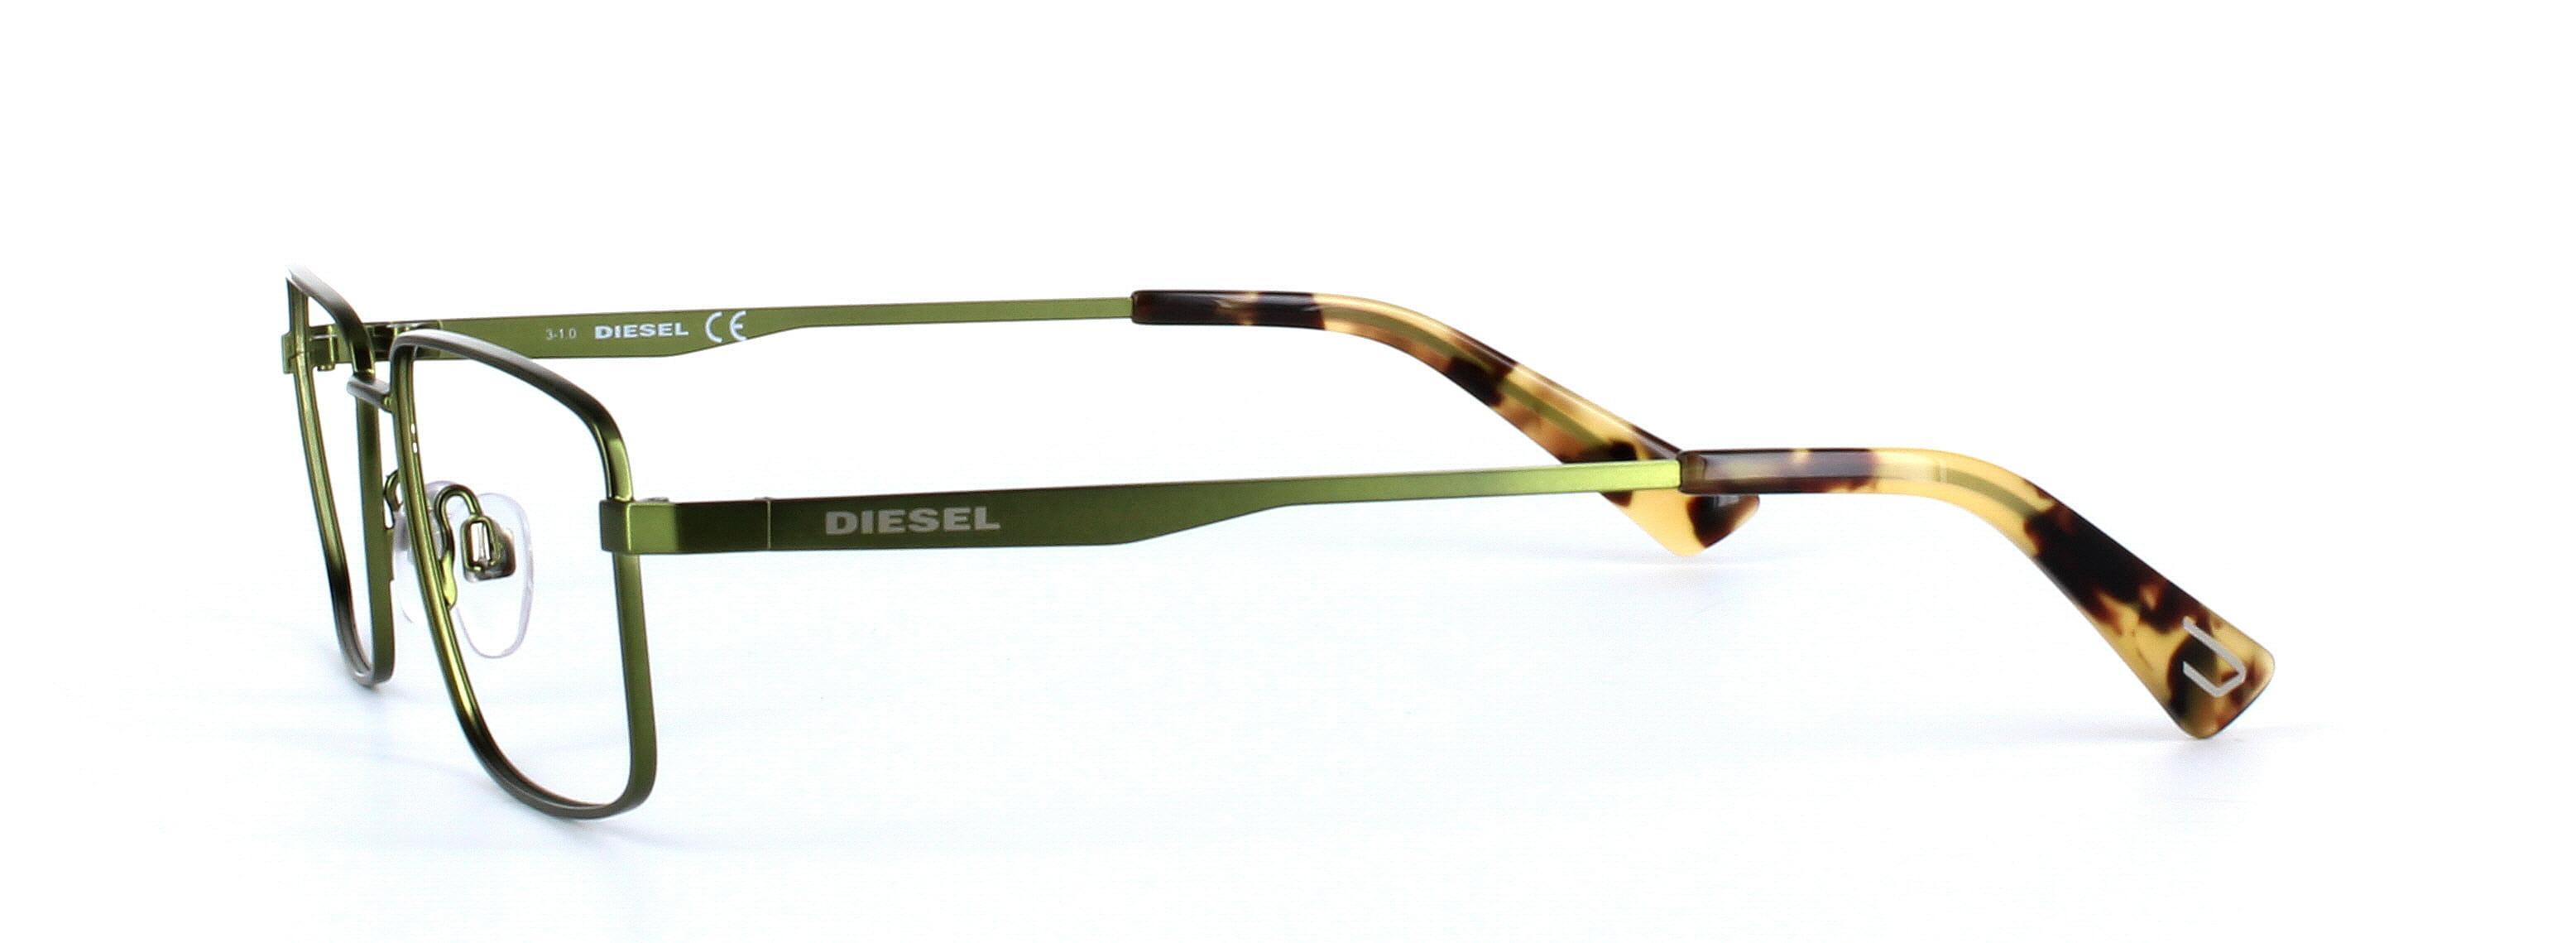 Diesel (DL5375-096) Olive Green Full Rim Rectangular Metal Glasses - Image View 2